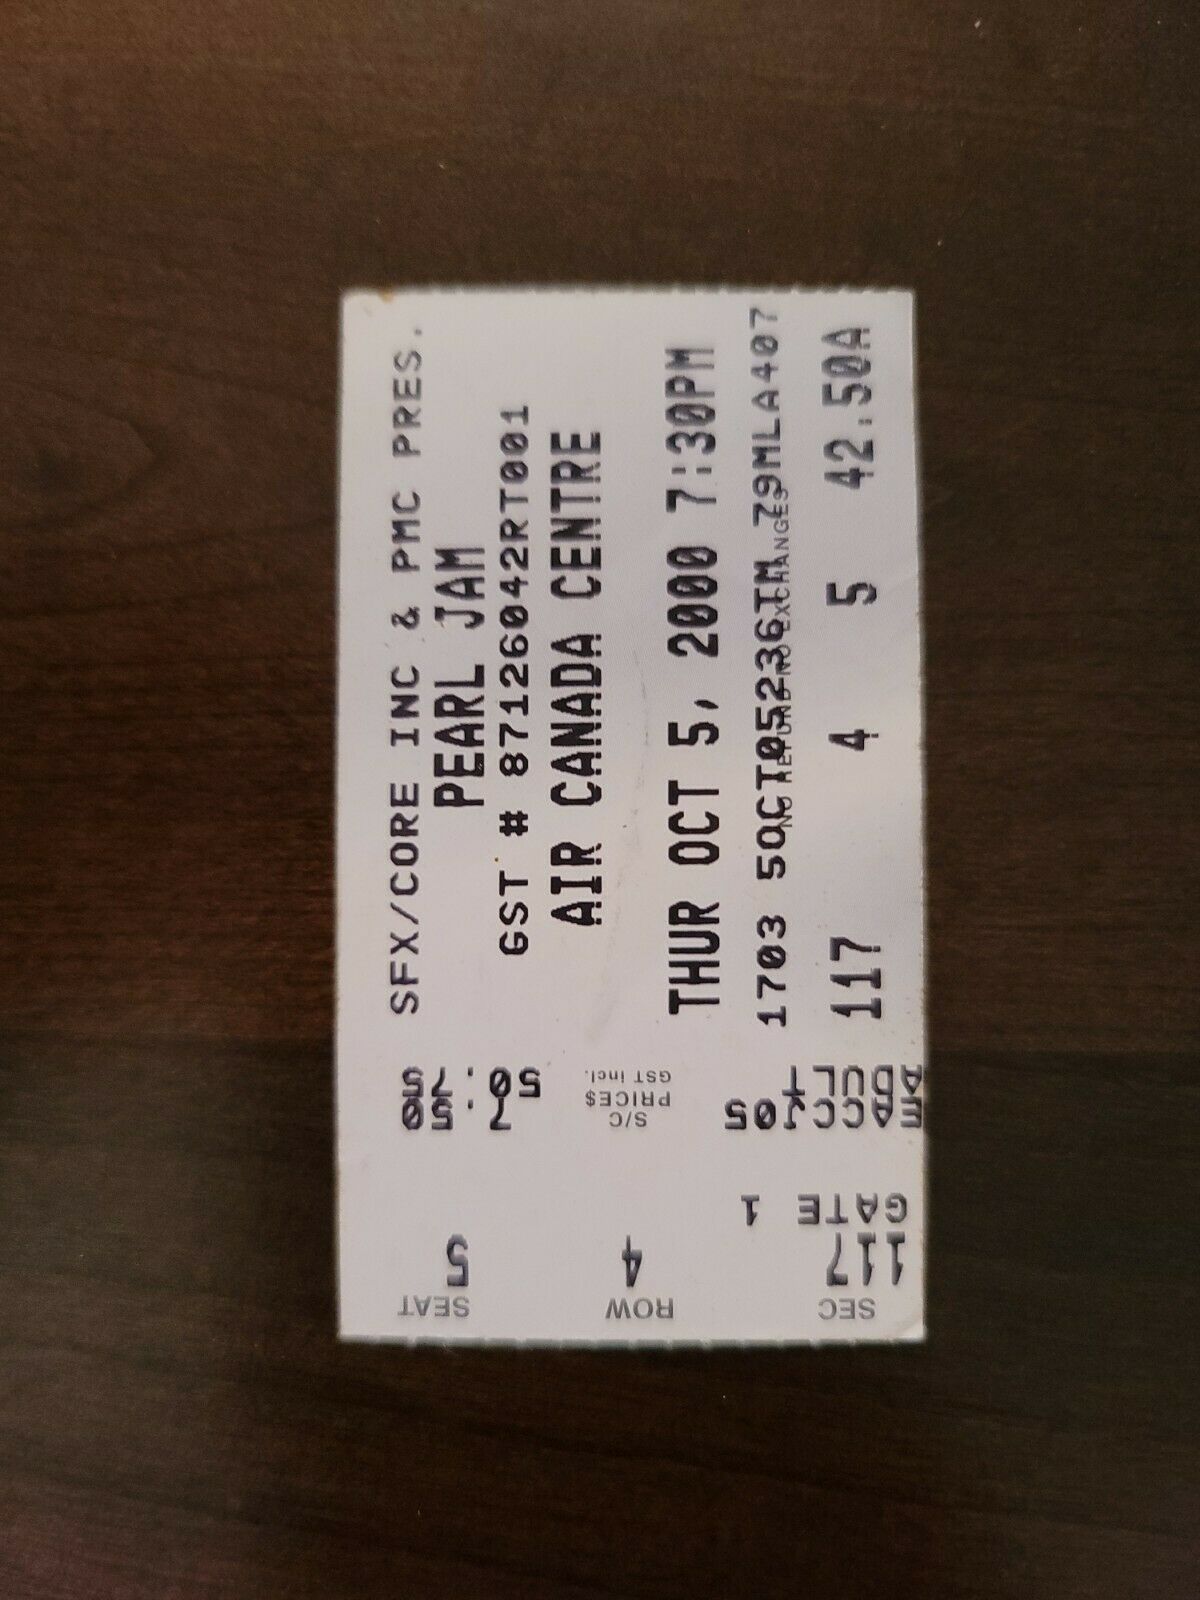 Pearl Jam 2000, Toronto Air Canada Centre Original Concert Ticket Stub